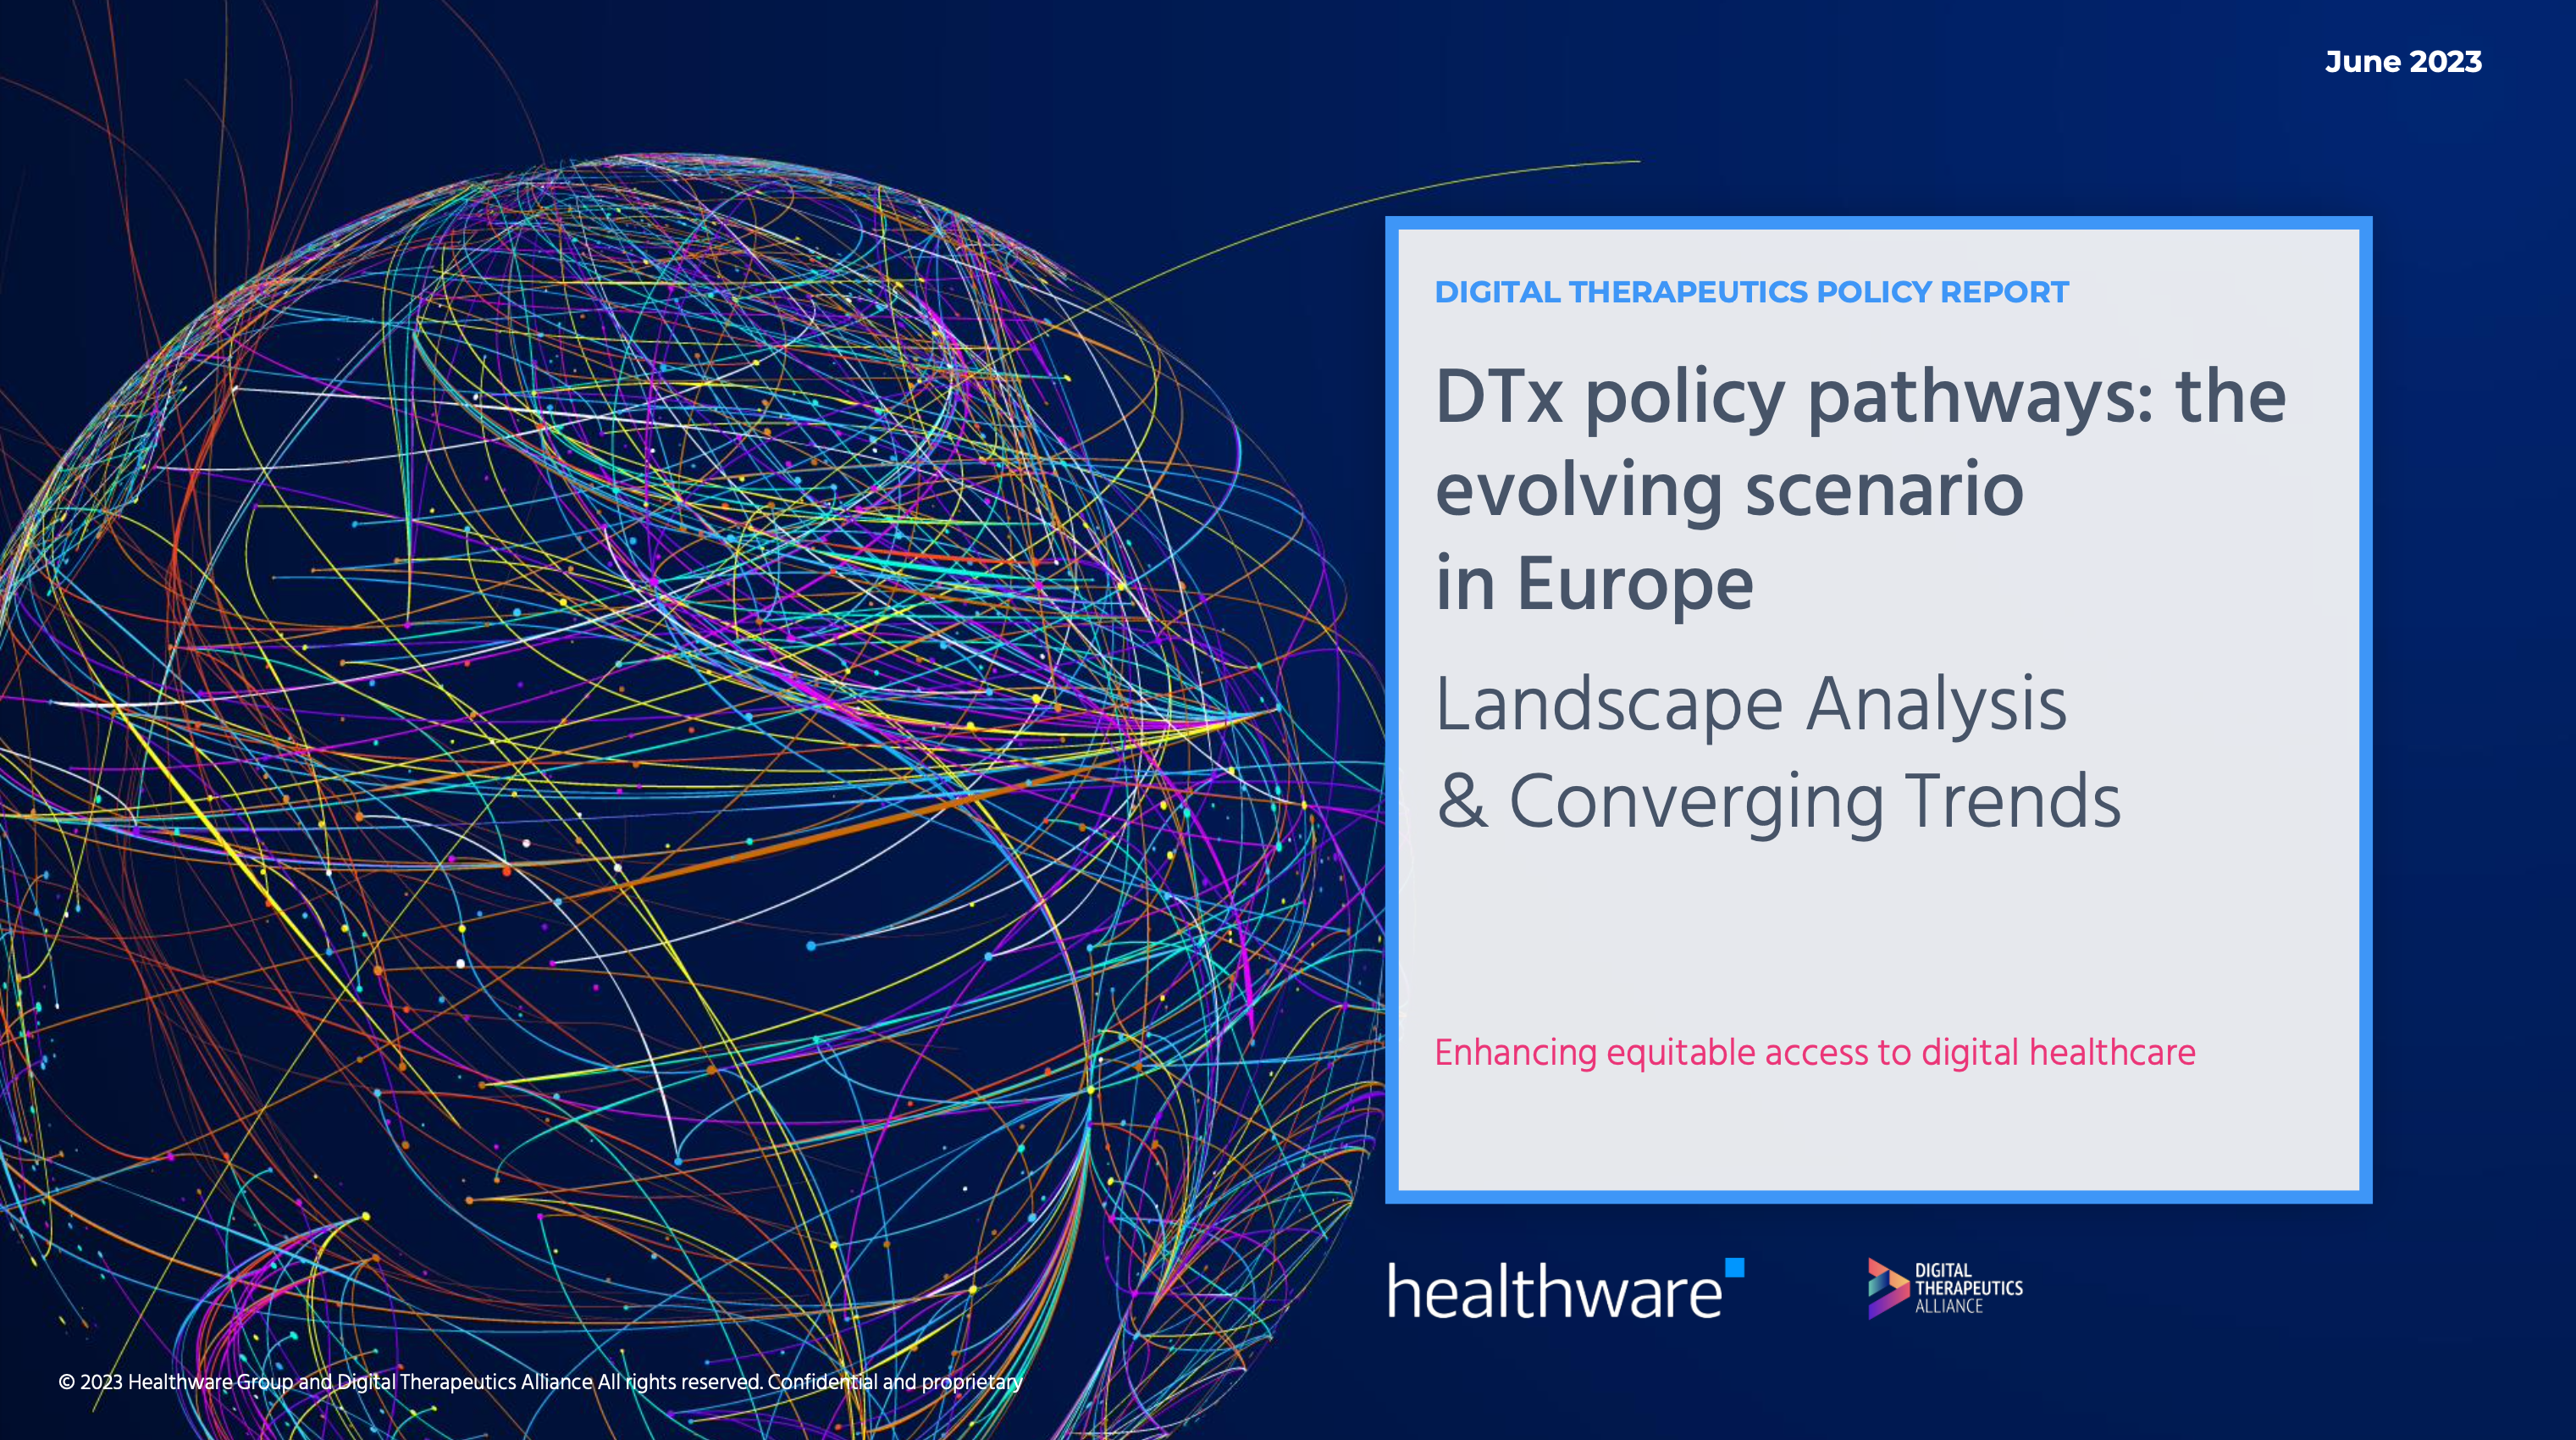 Exclusive: Digital Therapeutics Alliance, Healthware pen report on digital therapeutics policy pathways in Europe